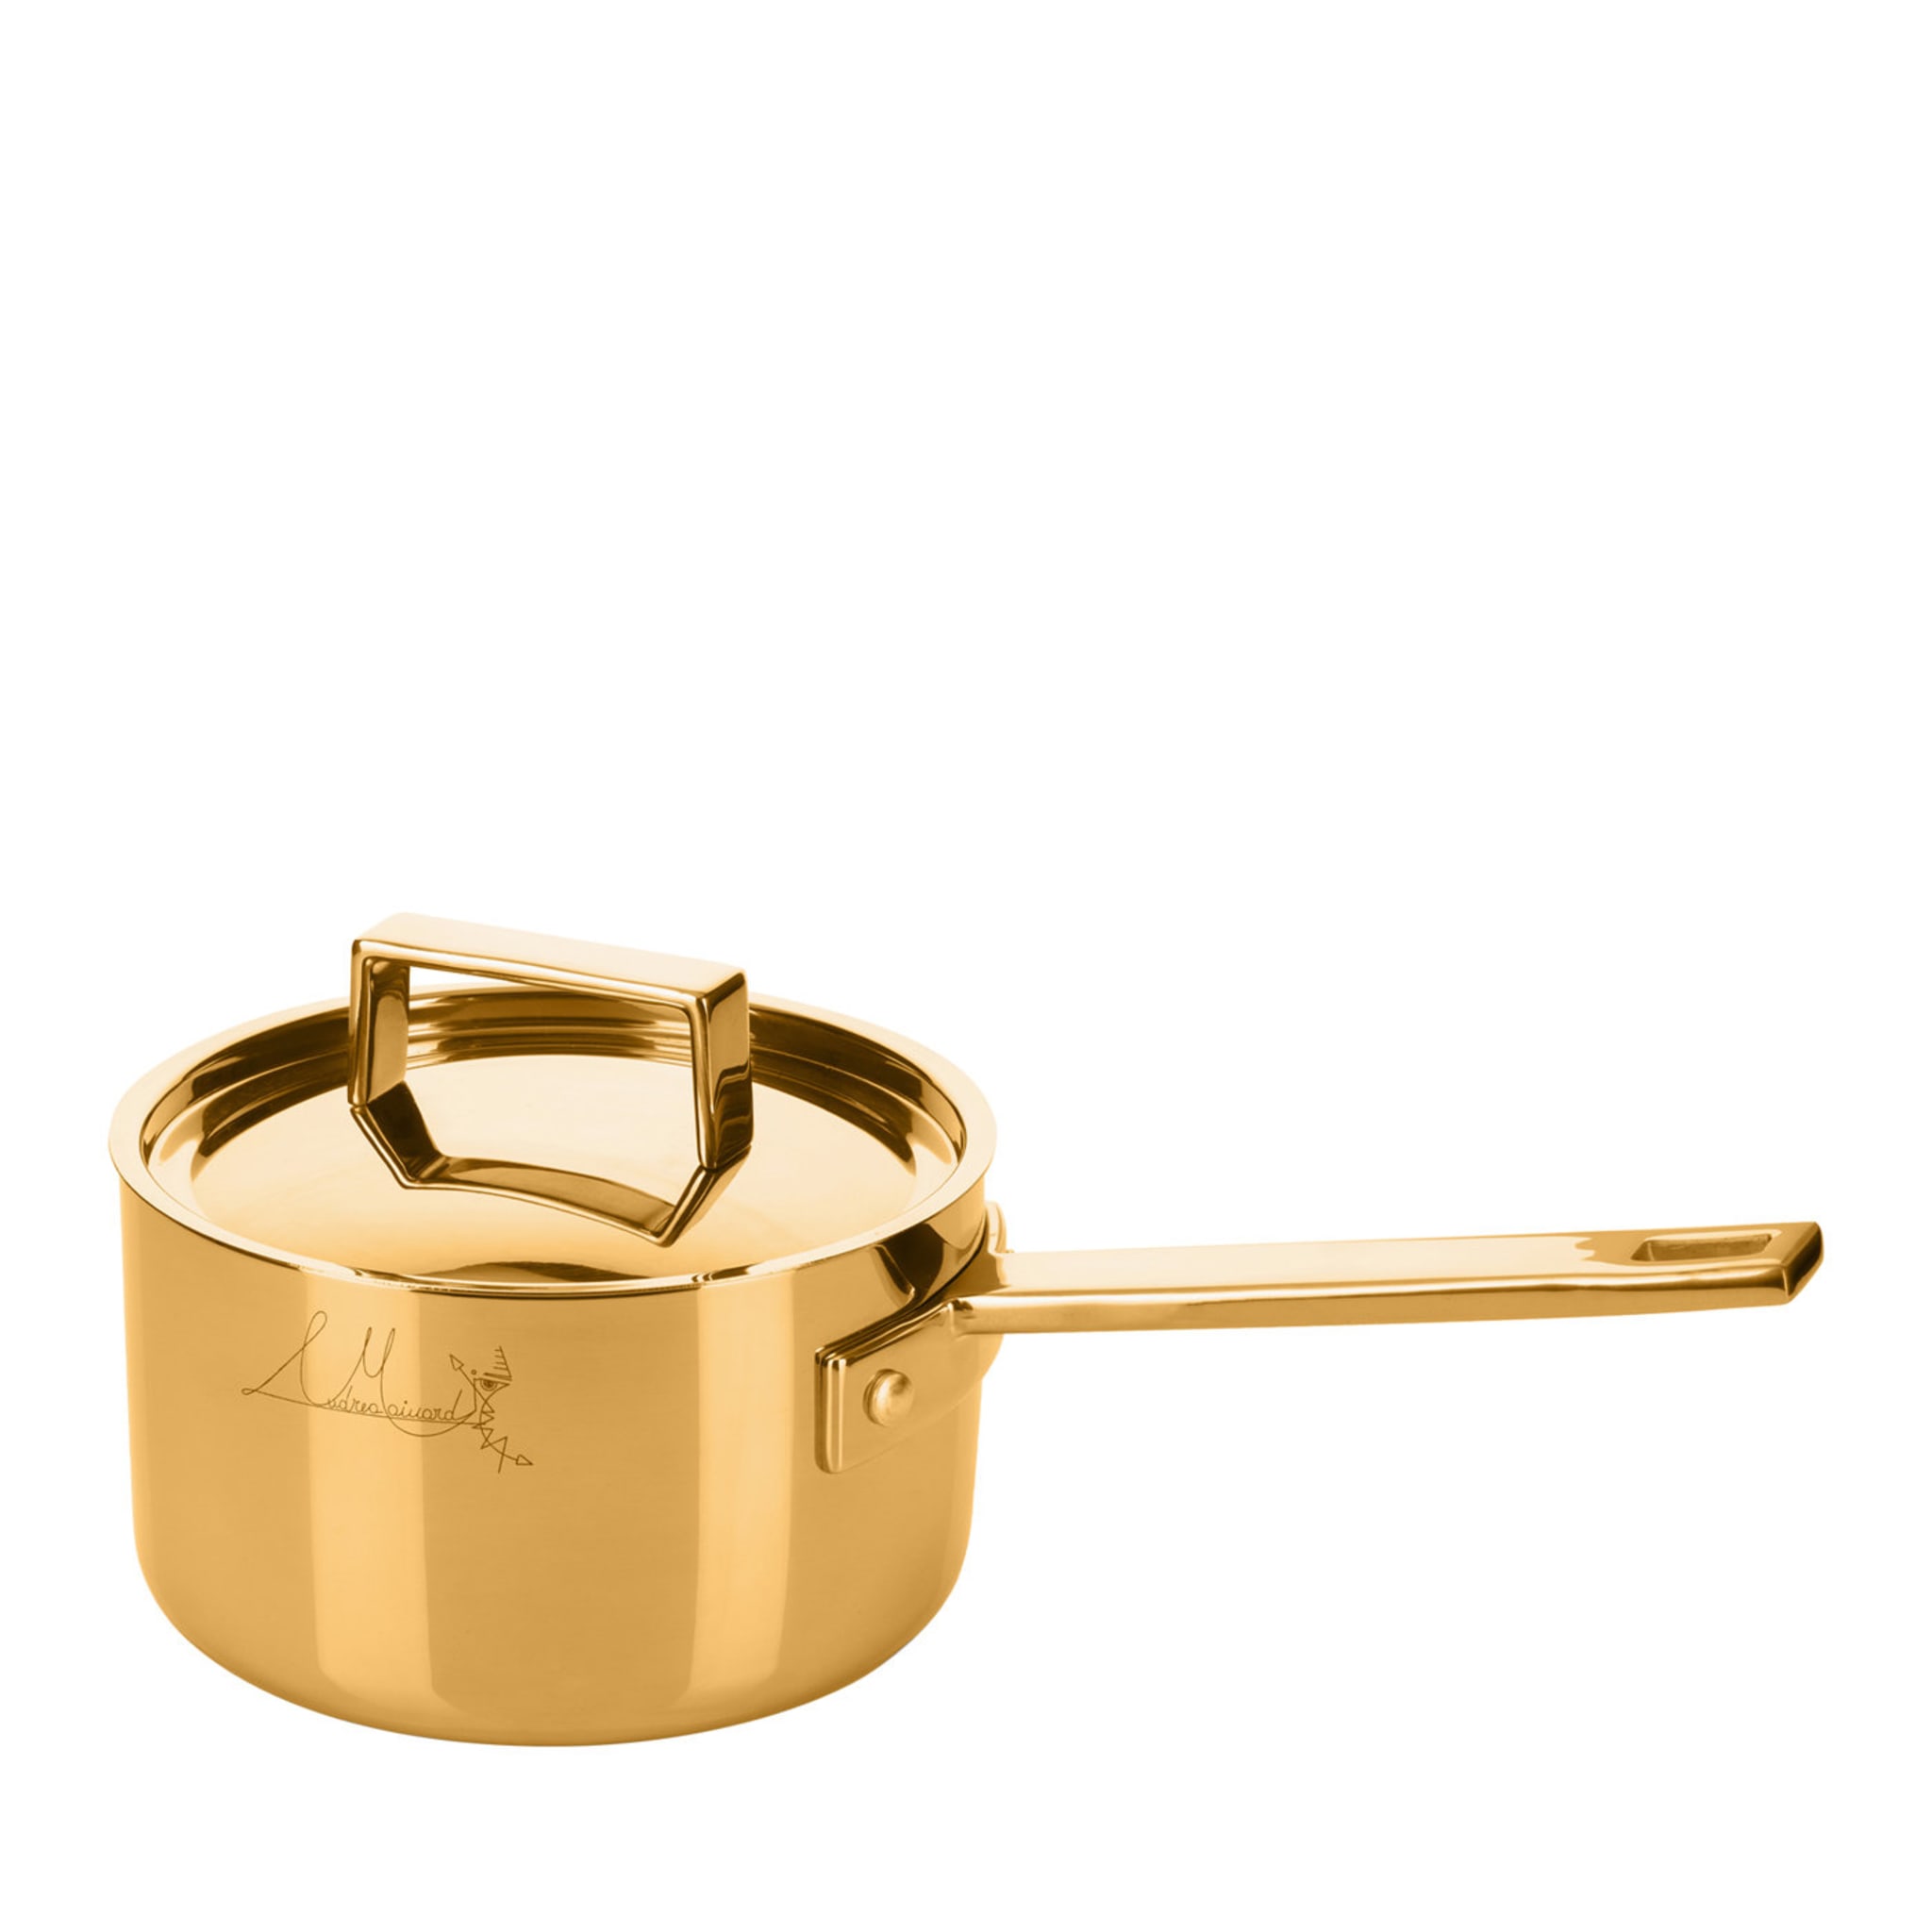 Attiva Gold 14cm Saucepan with Lid - Main view